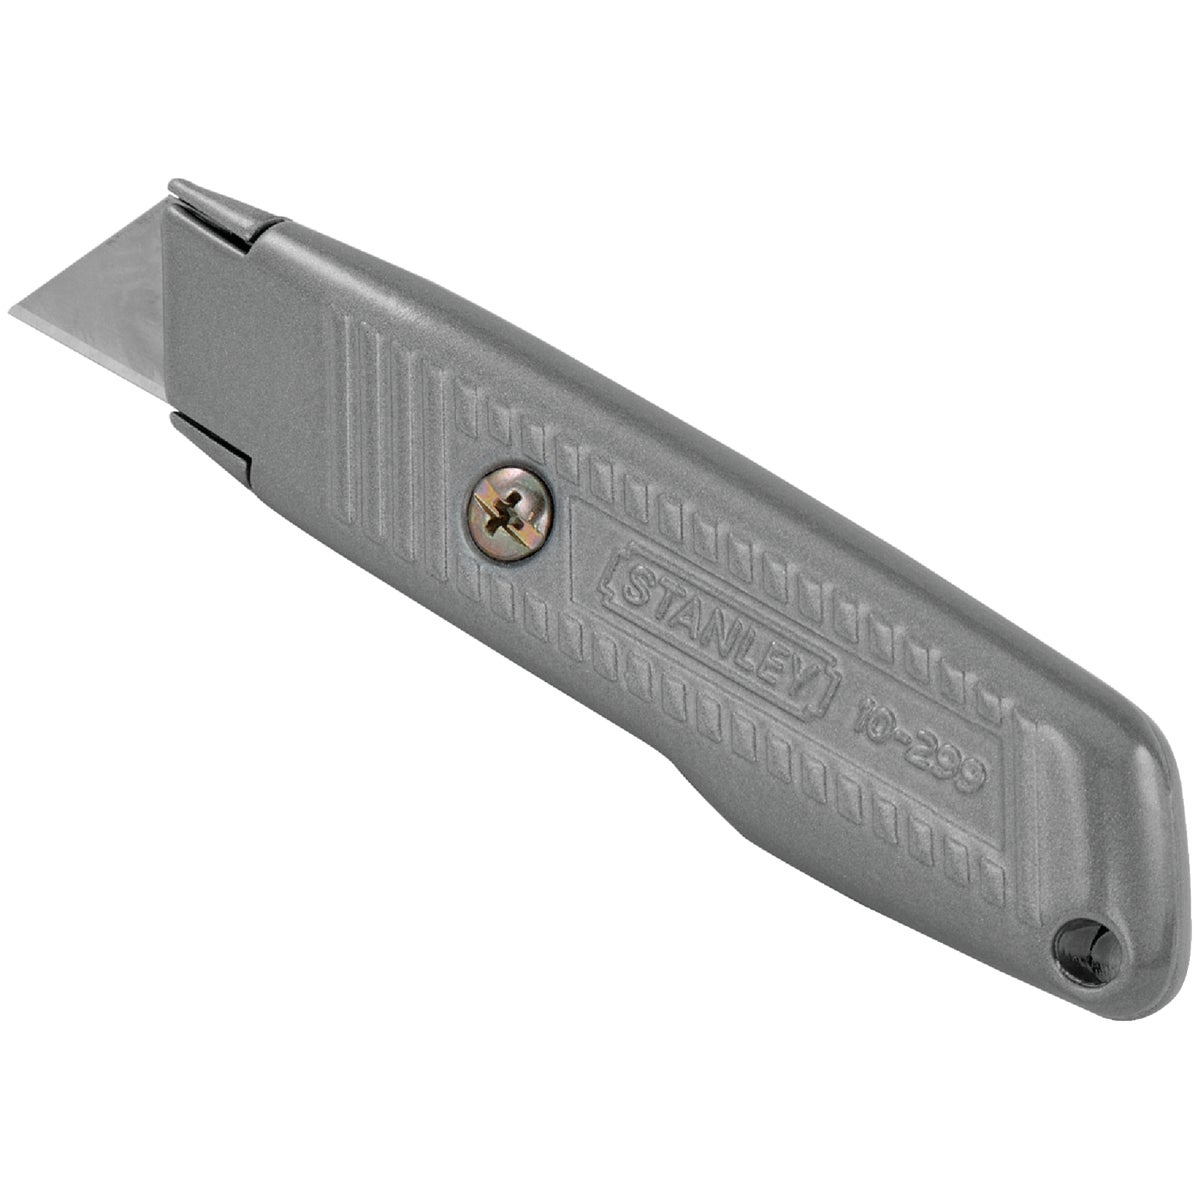 Item 336149, 2-piece die-cast aluminum handle provides blade storage.